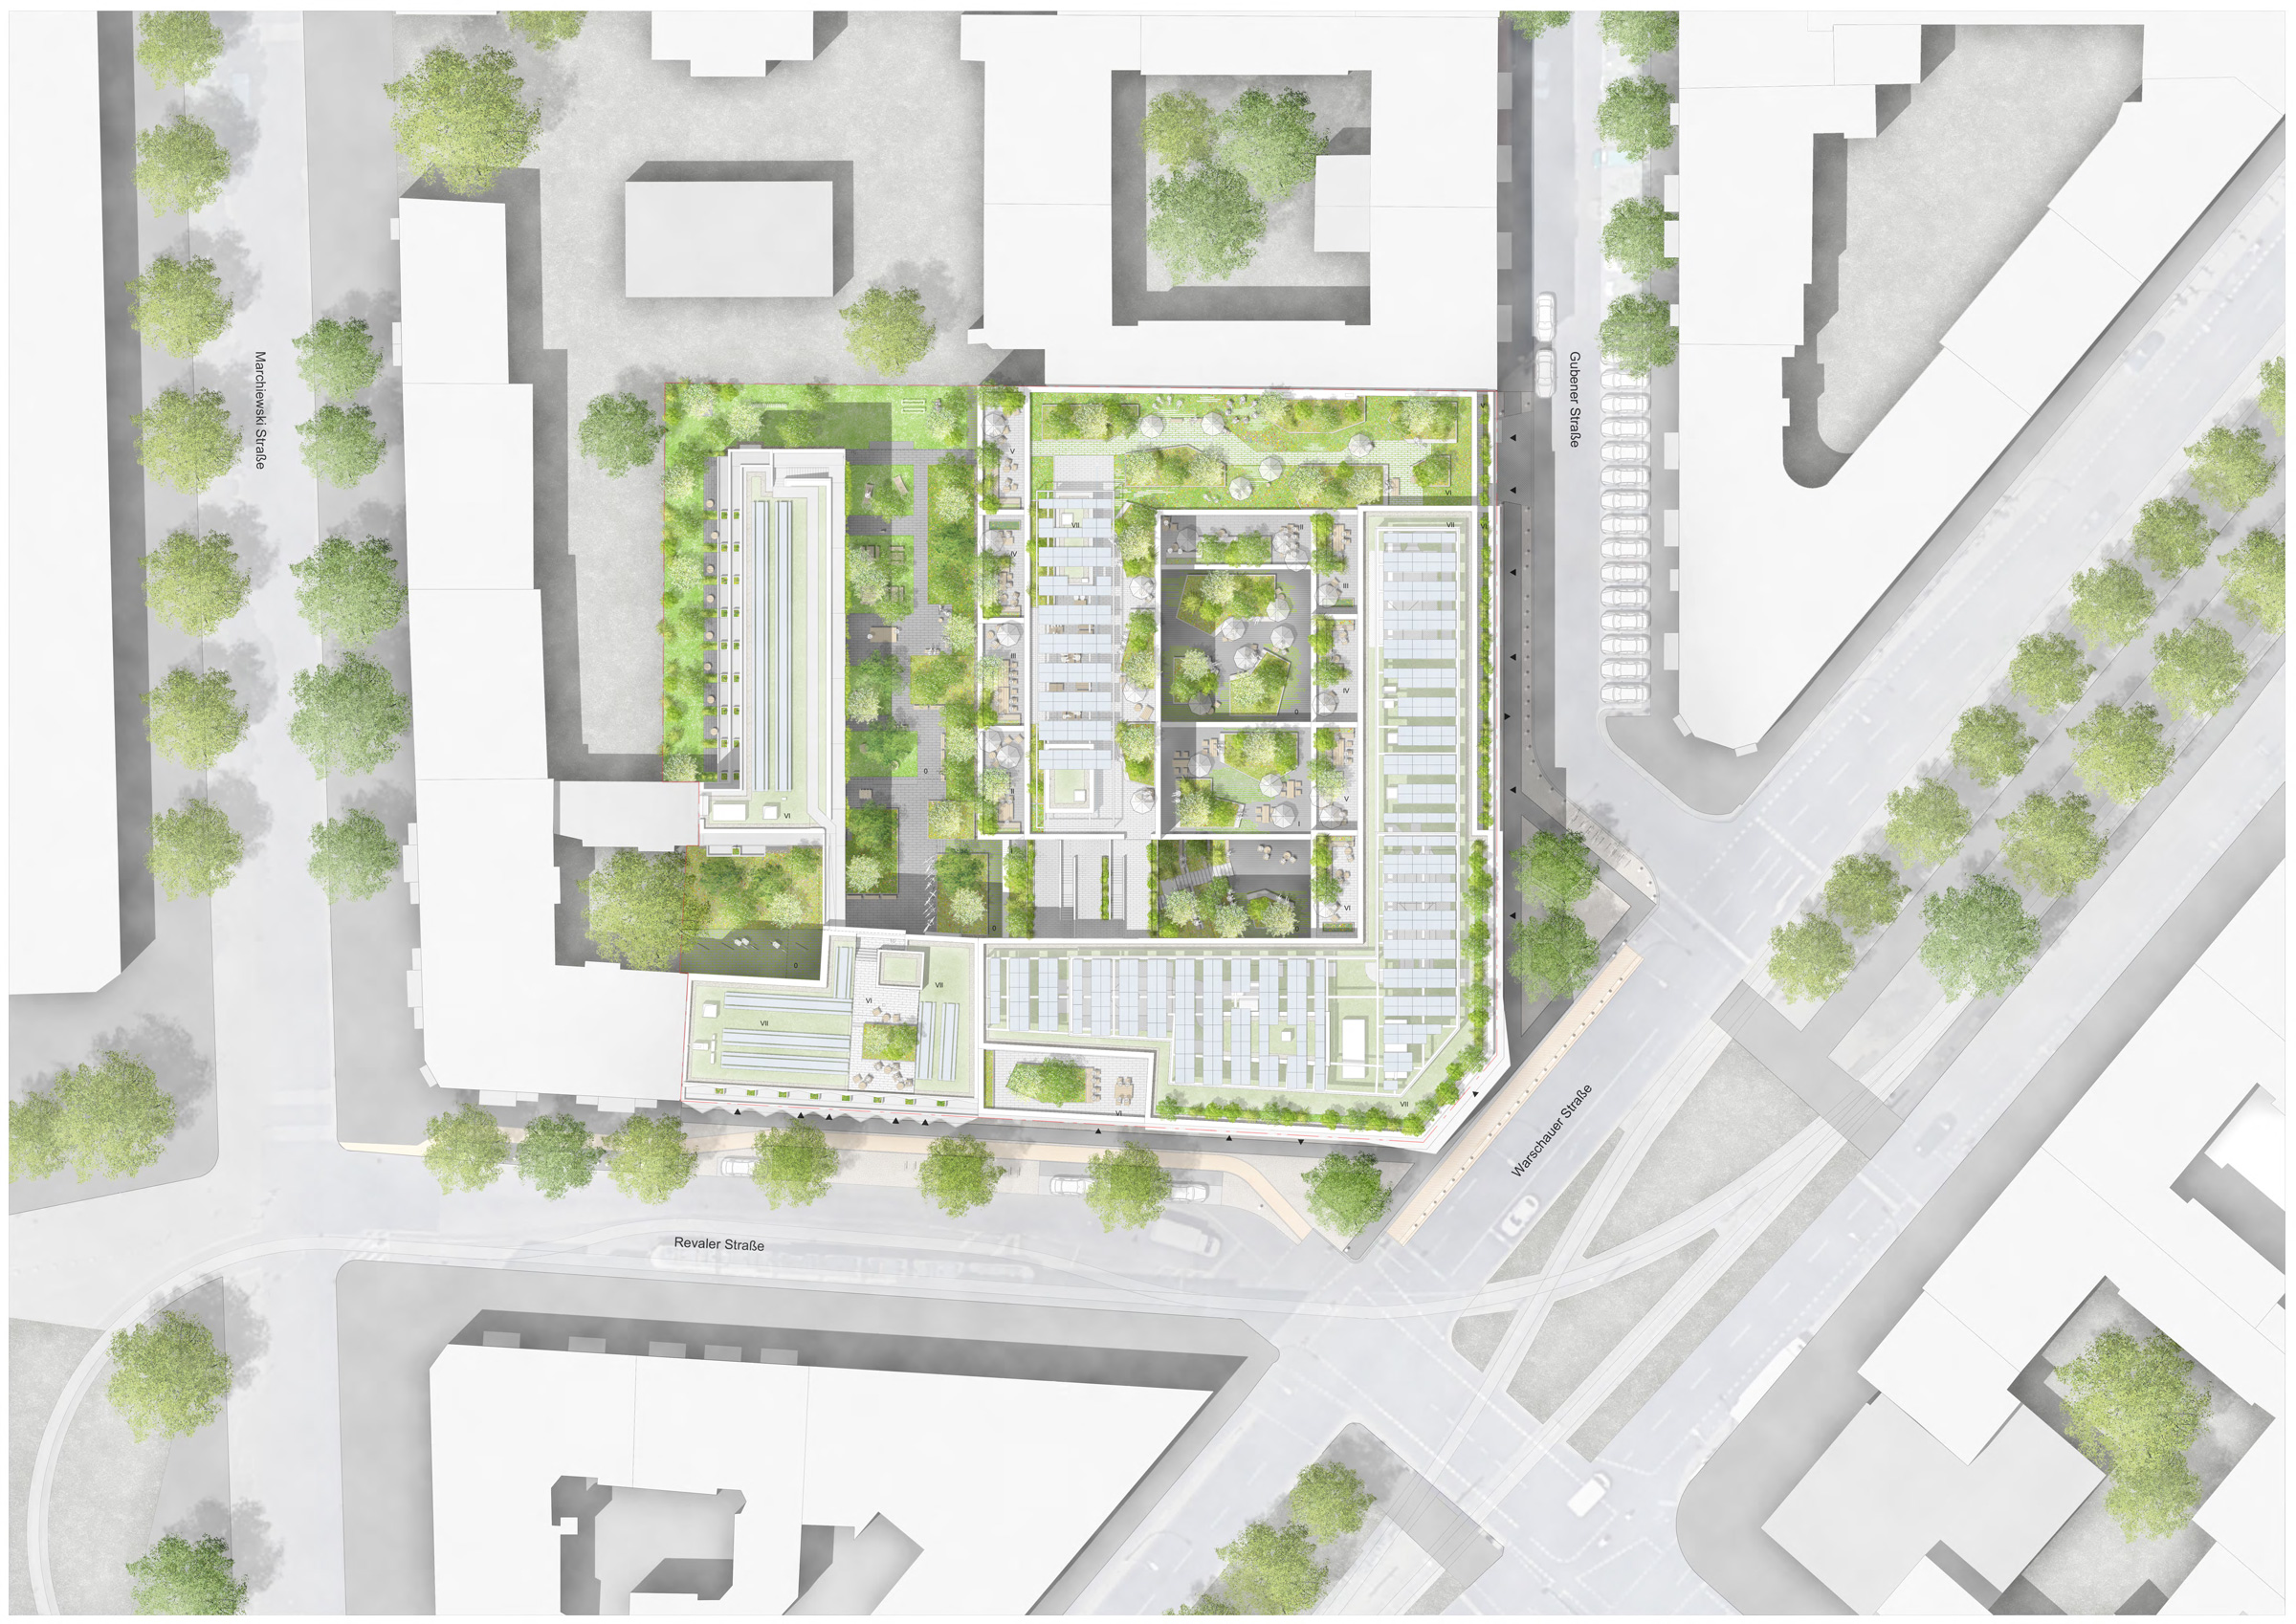 Lageplan zum Projekt Revaler Straße